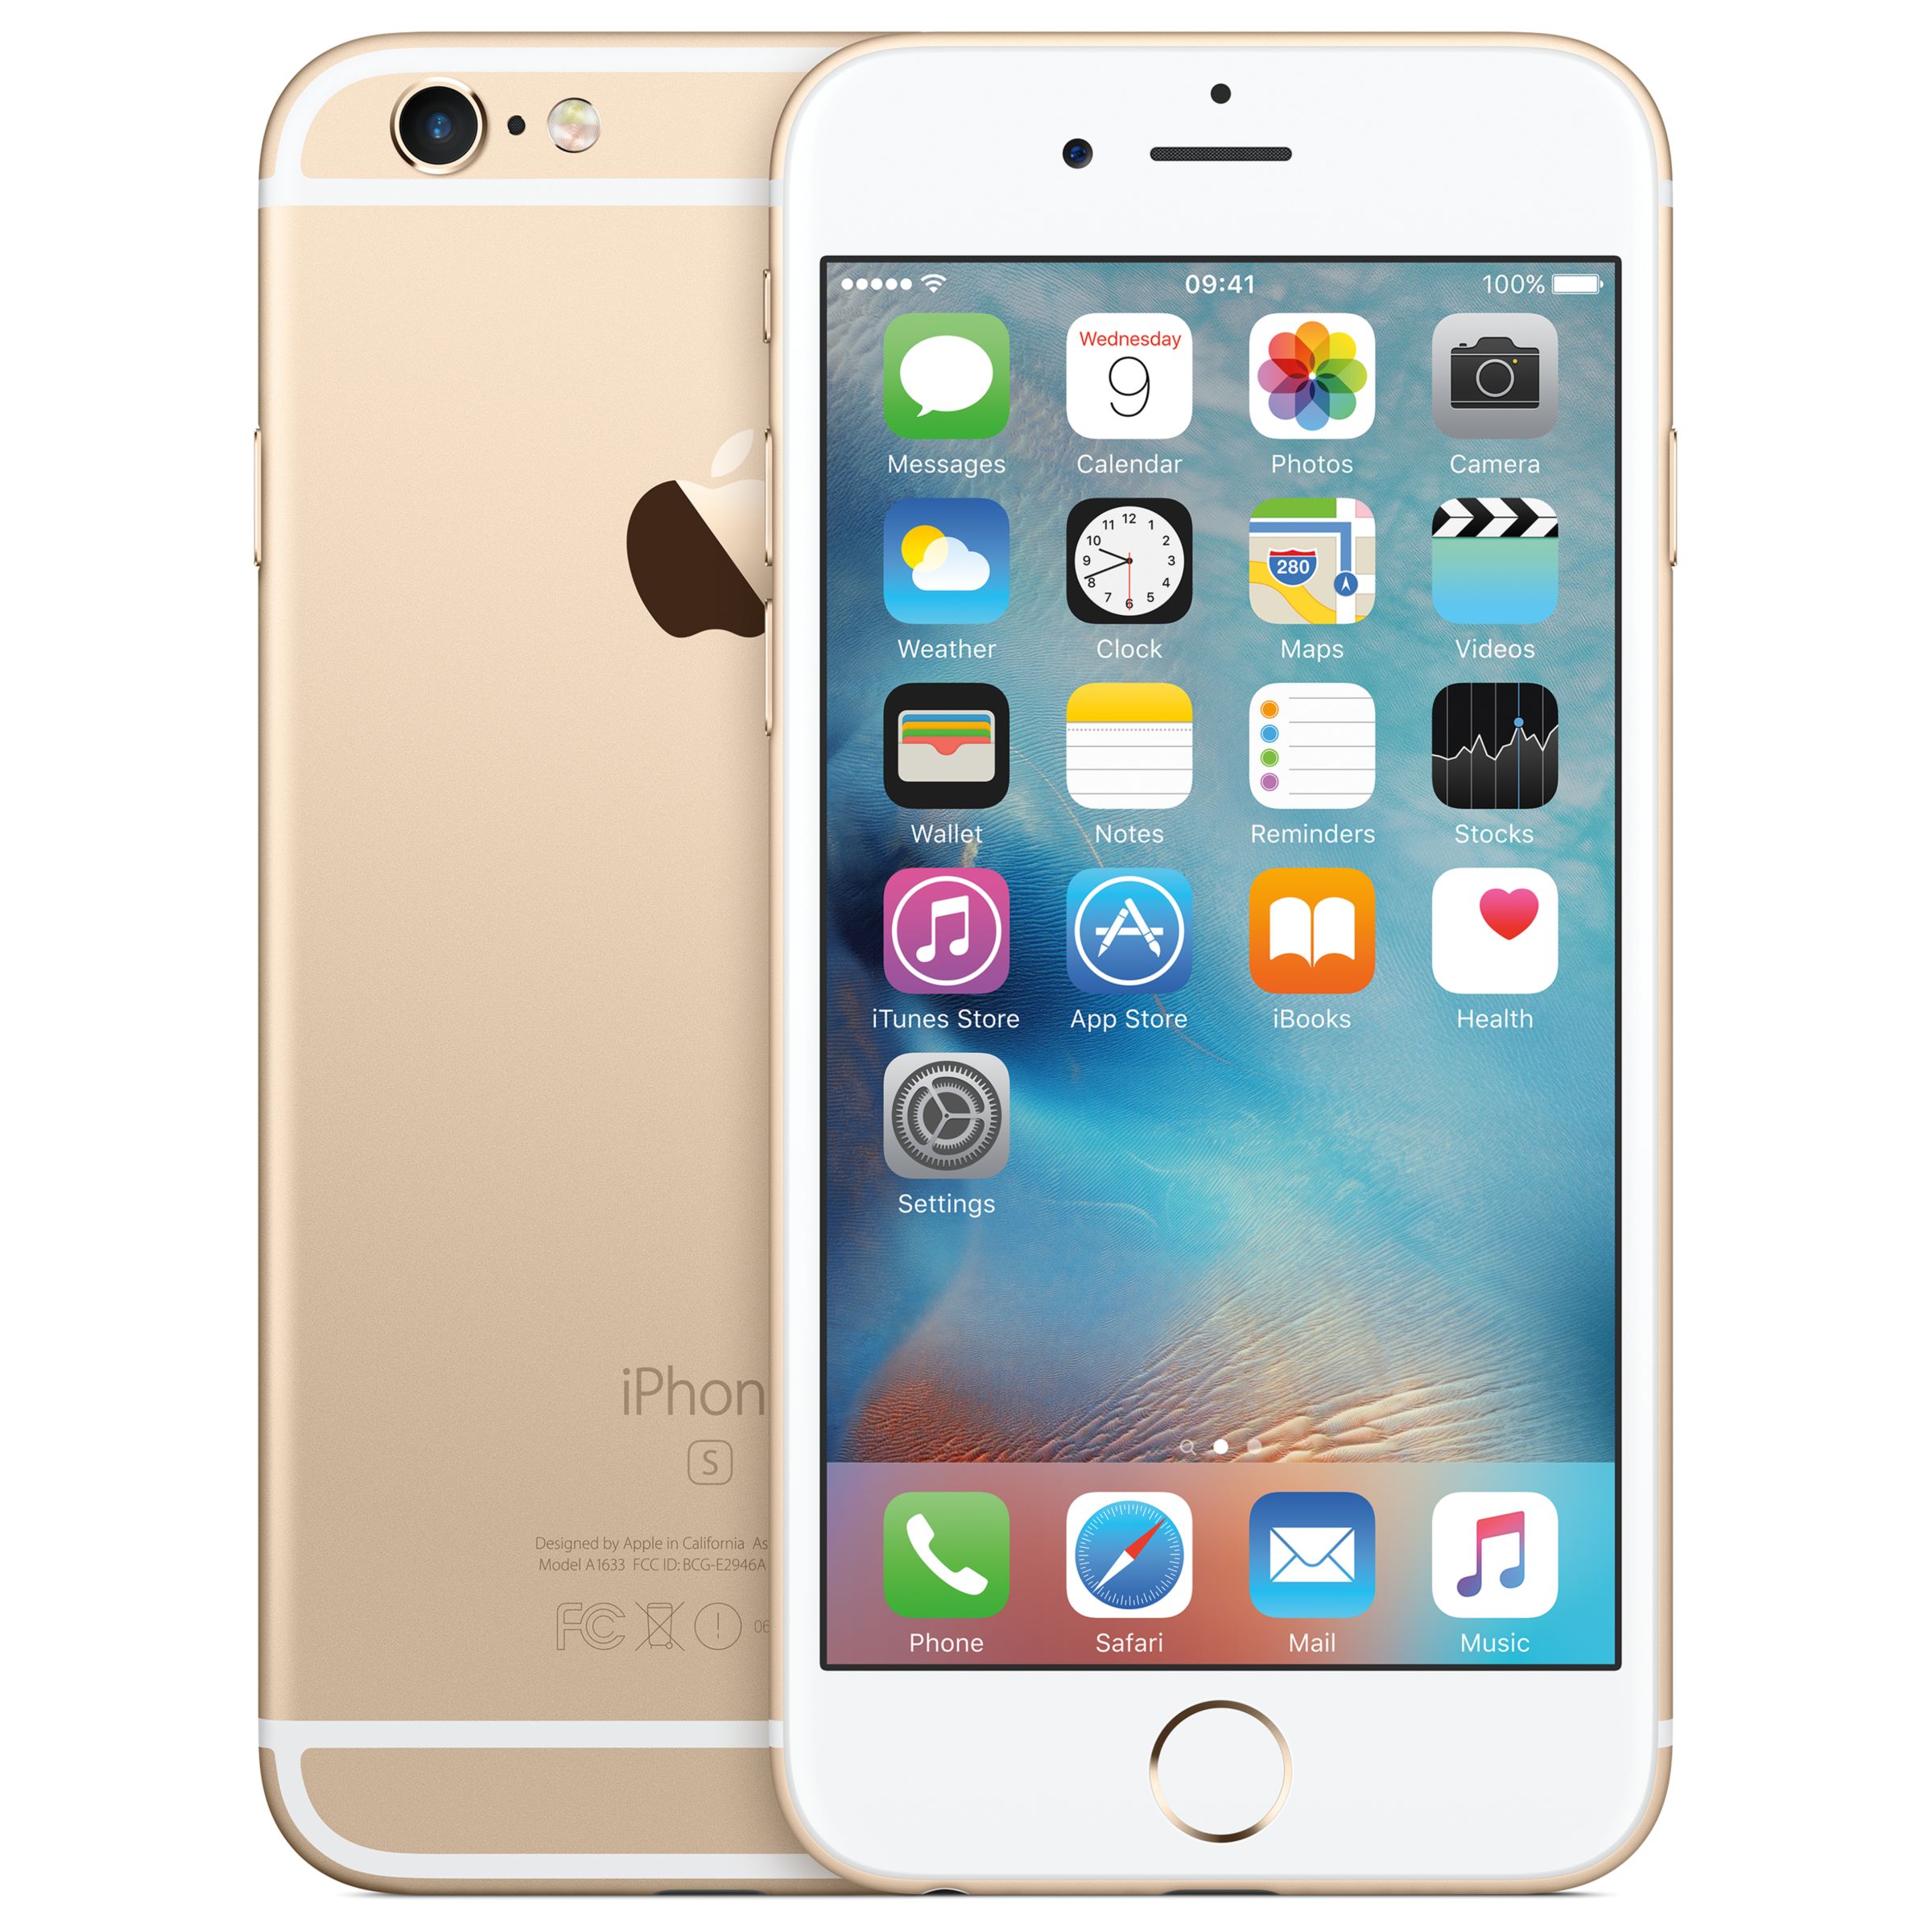 Apple iPhone 6s, iOS, 4.7", 4G LTE, SIM Free, 64GB